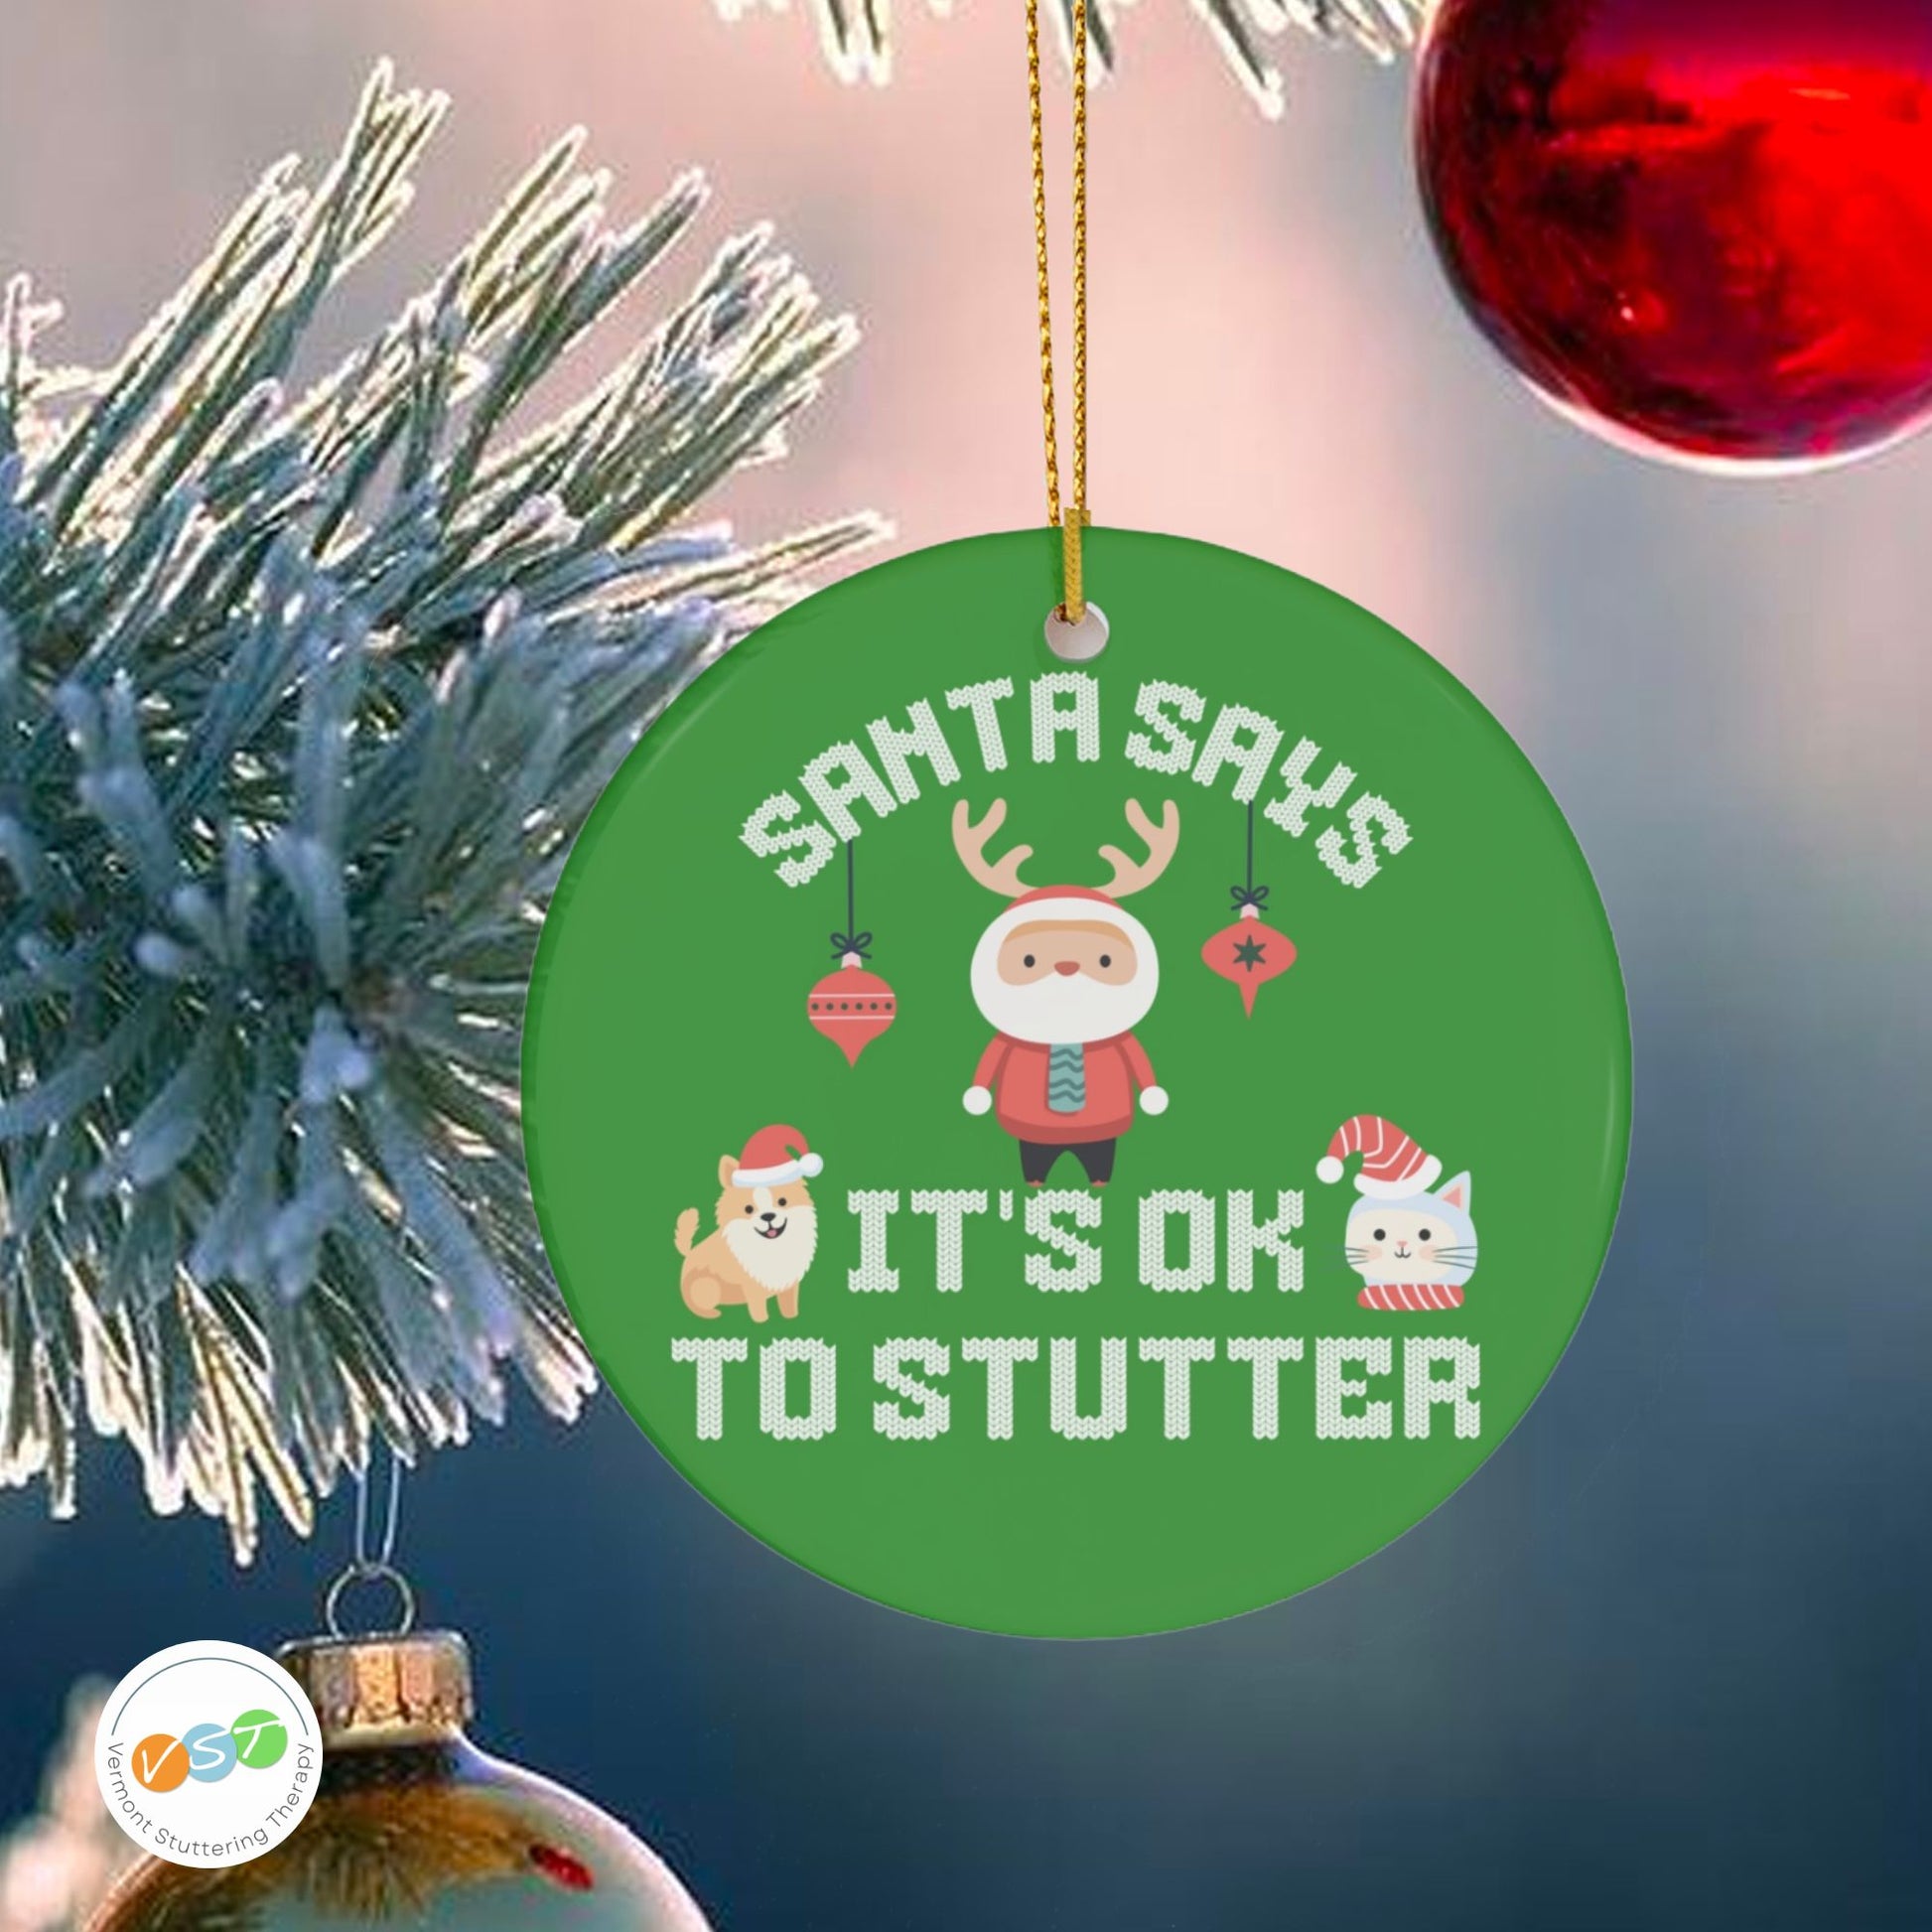 Santa Says It's OK to Stutter Christmas Ornament